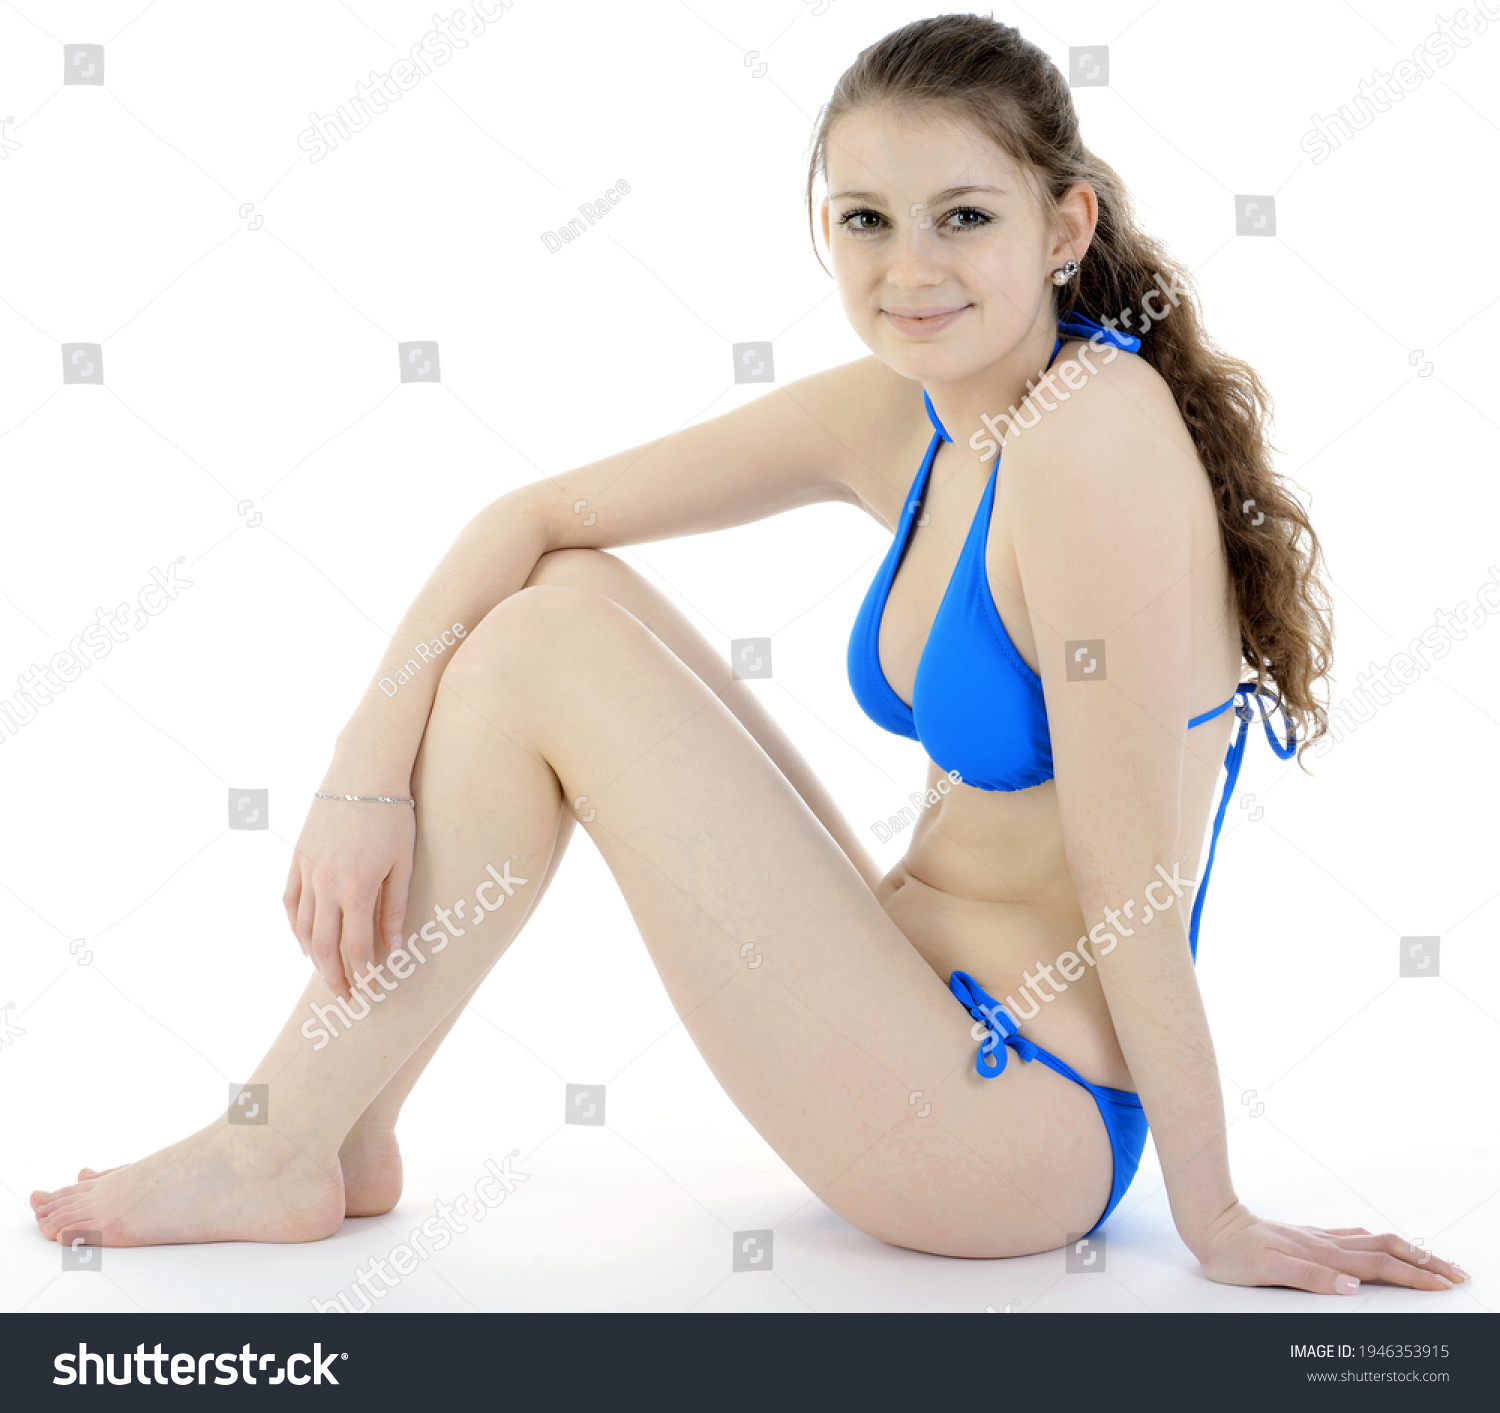 Correlate kapok Fine 11,408 Girl teen bikini Images, Stock Photos & Vectors | Shutterstock